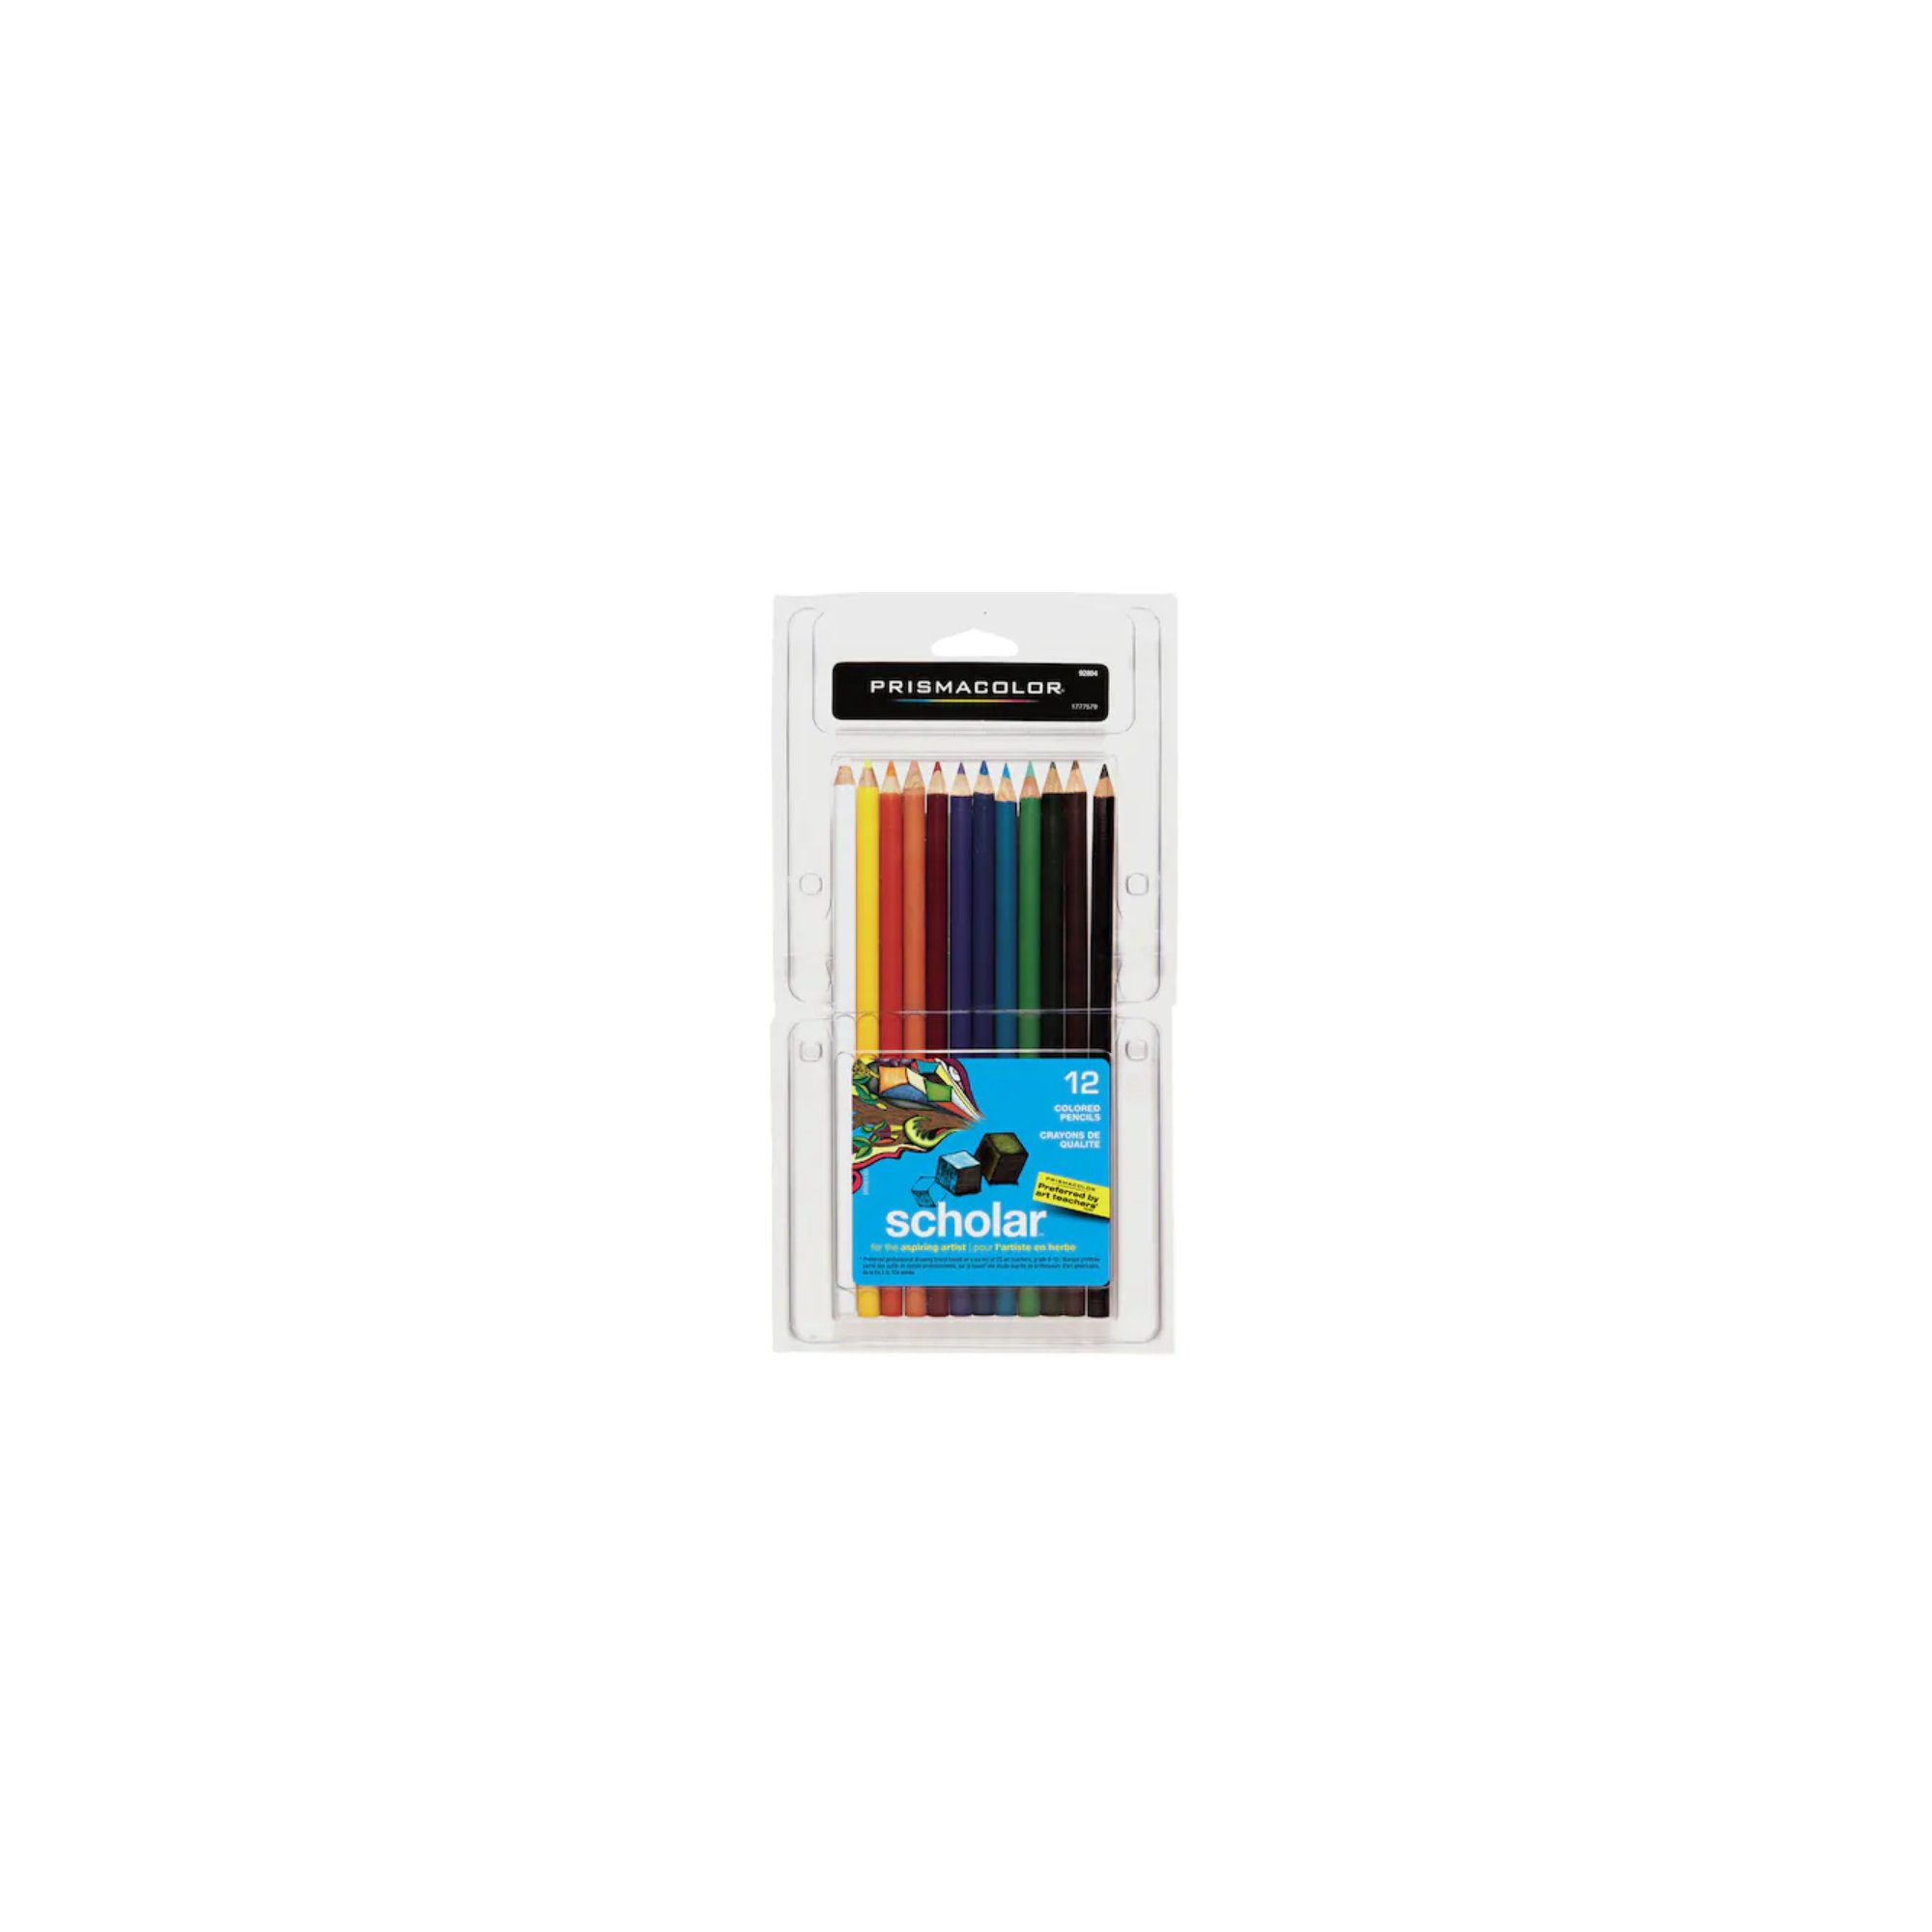 Prismacolor Scholar Colored Pencils - 12 Piece Set, Hobby Lobby